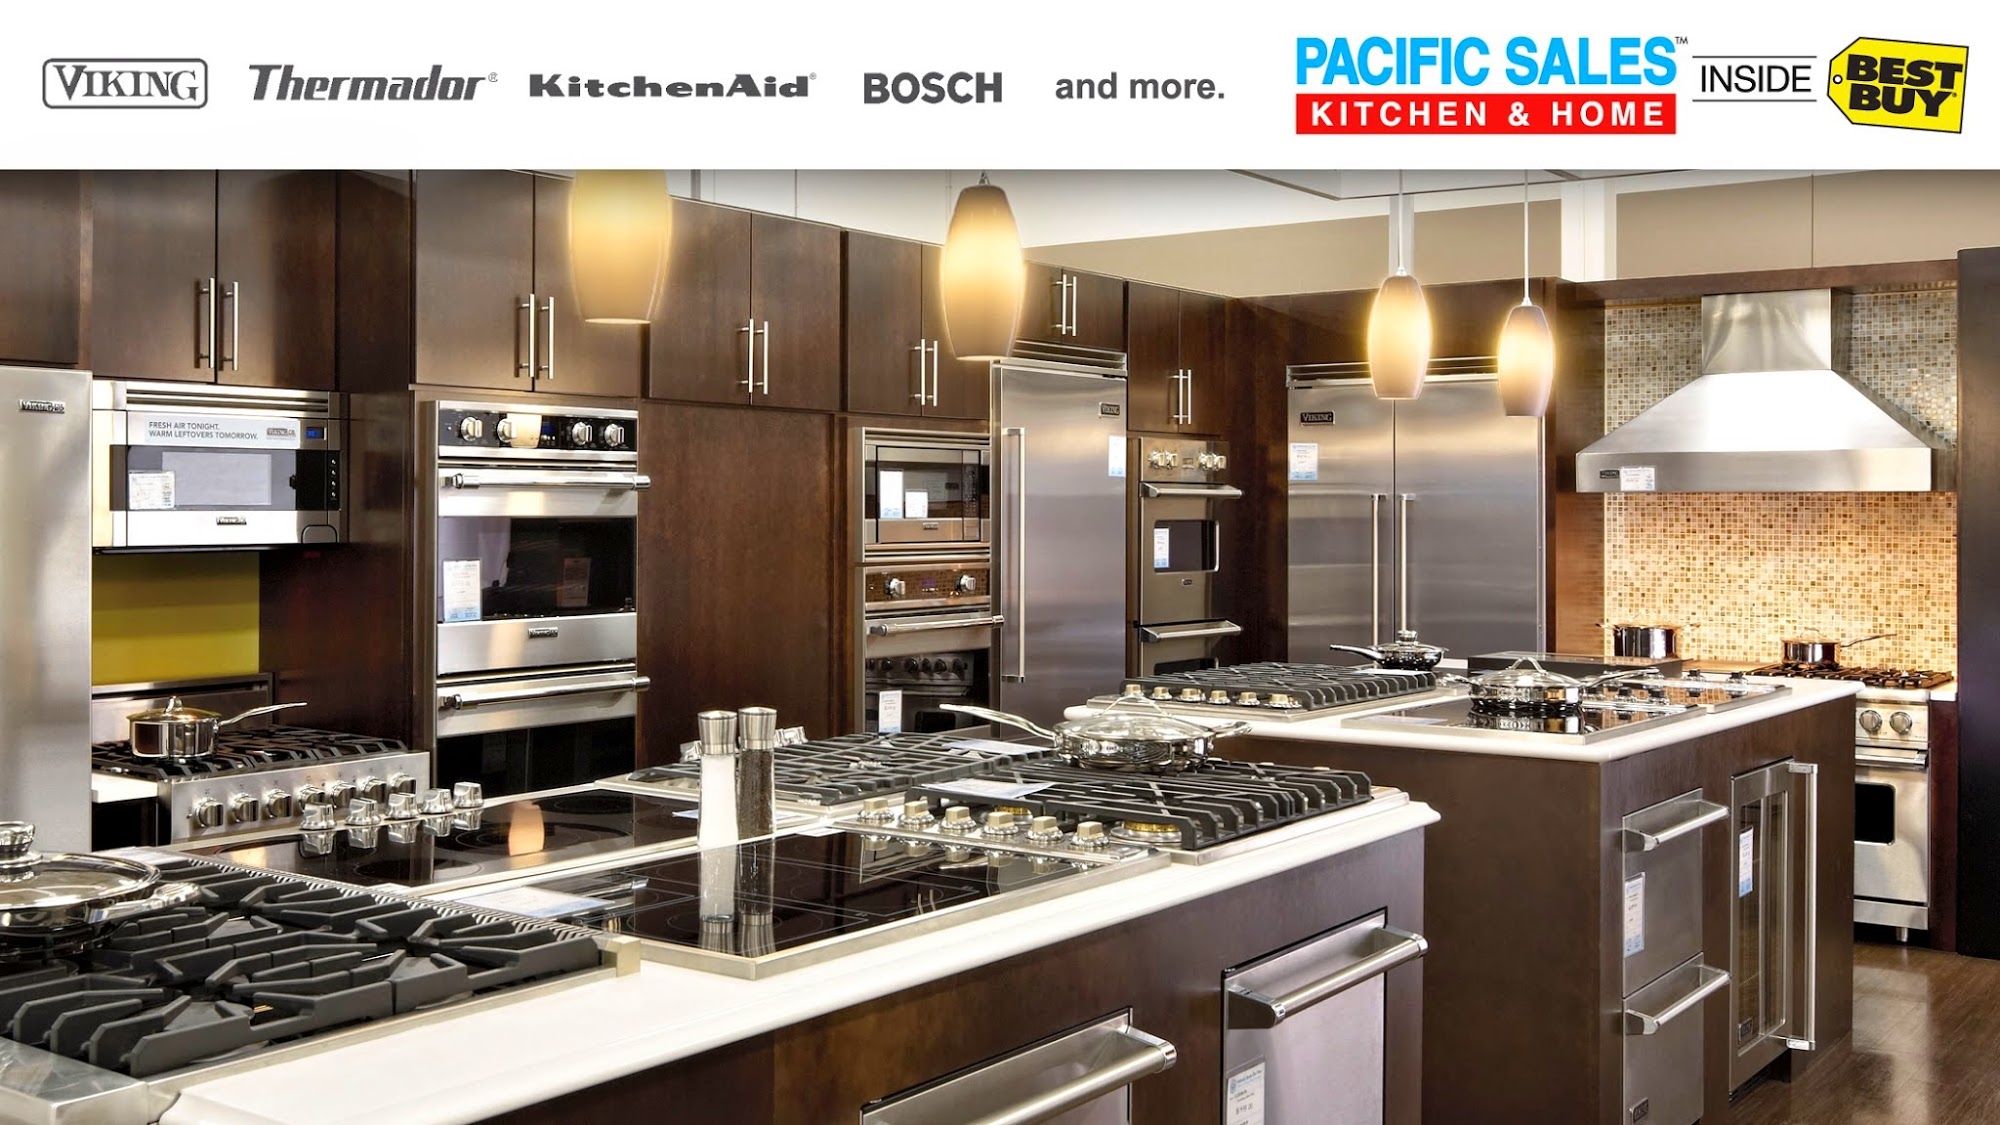 Pacific Sales Kitchen & Home Huntington Beach